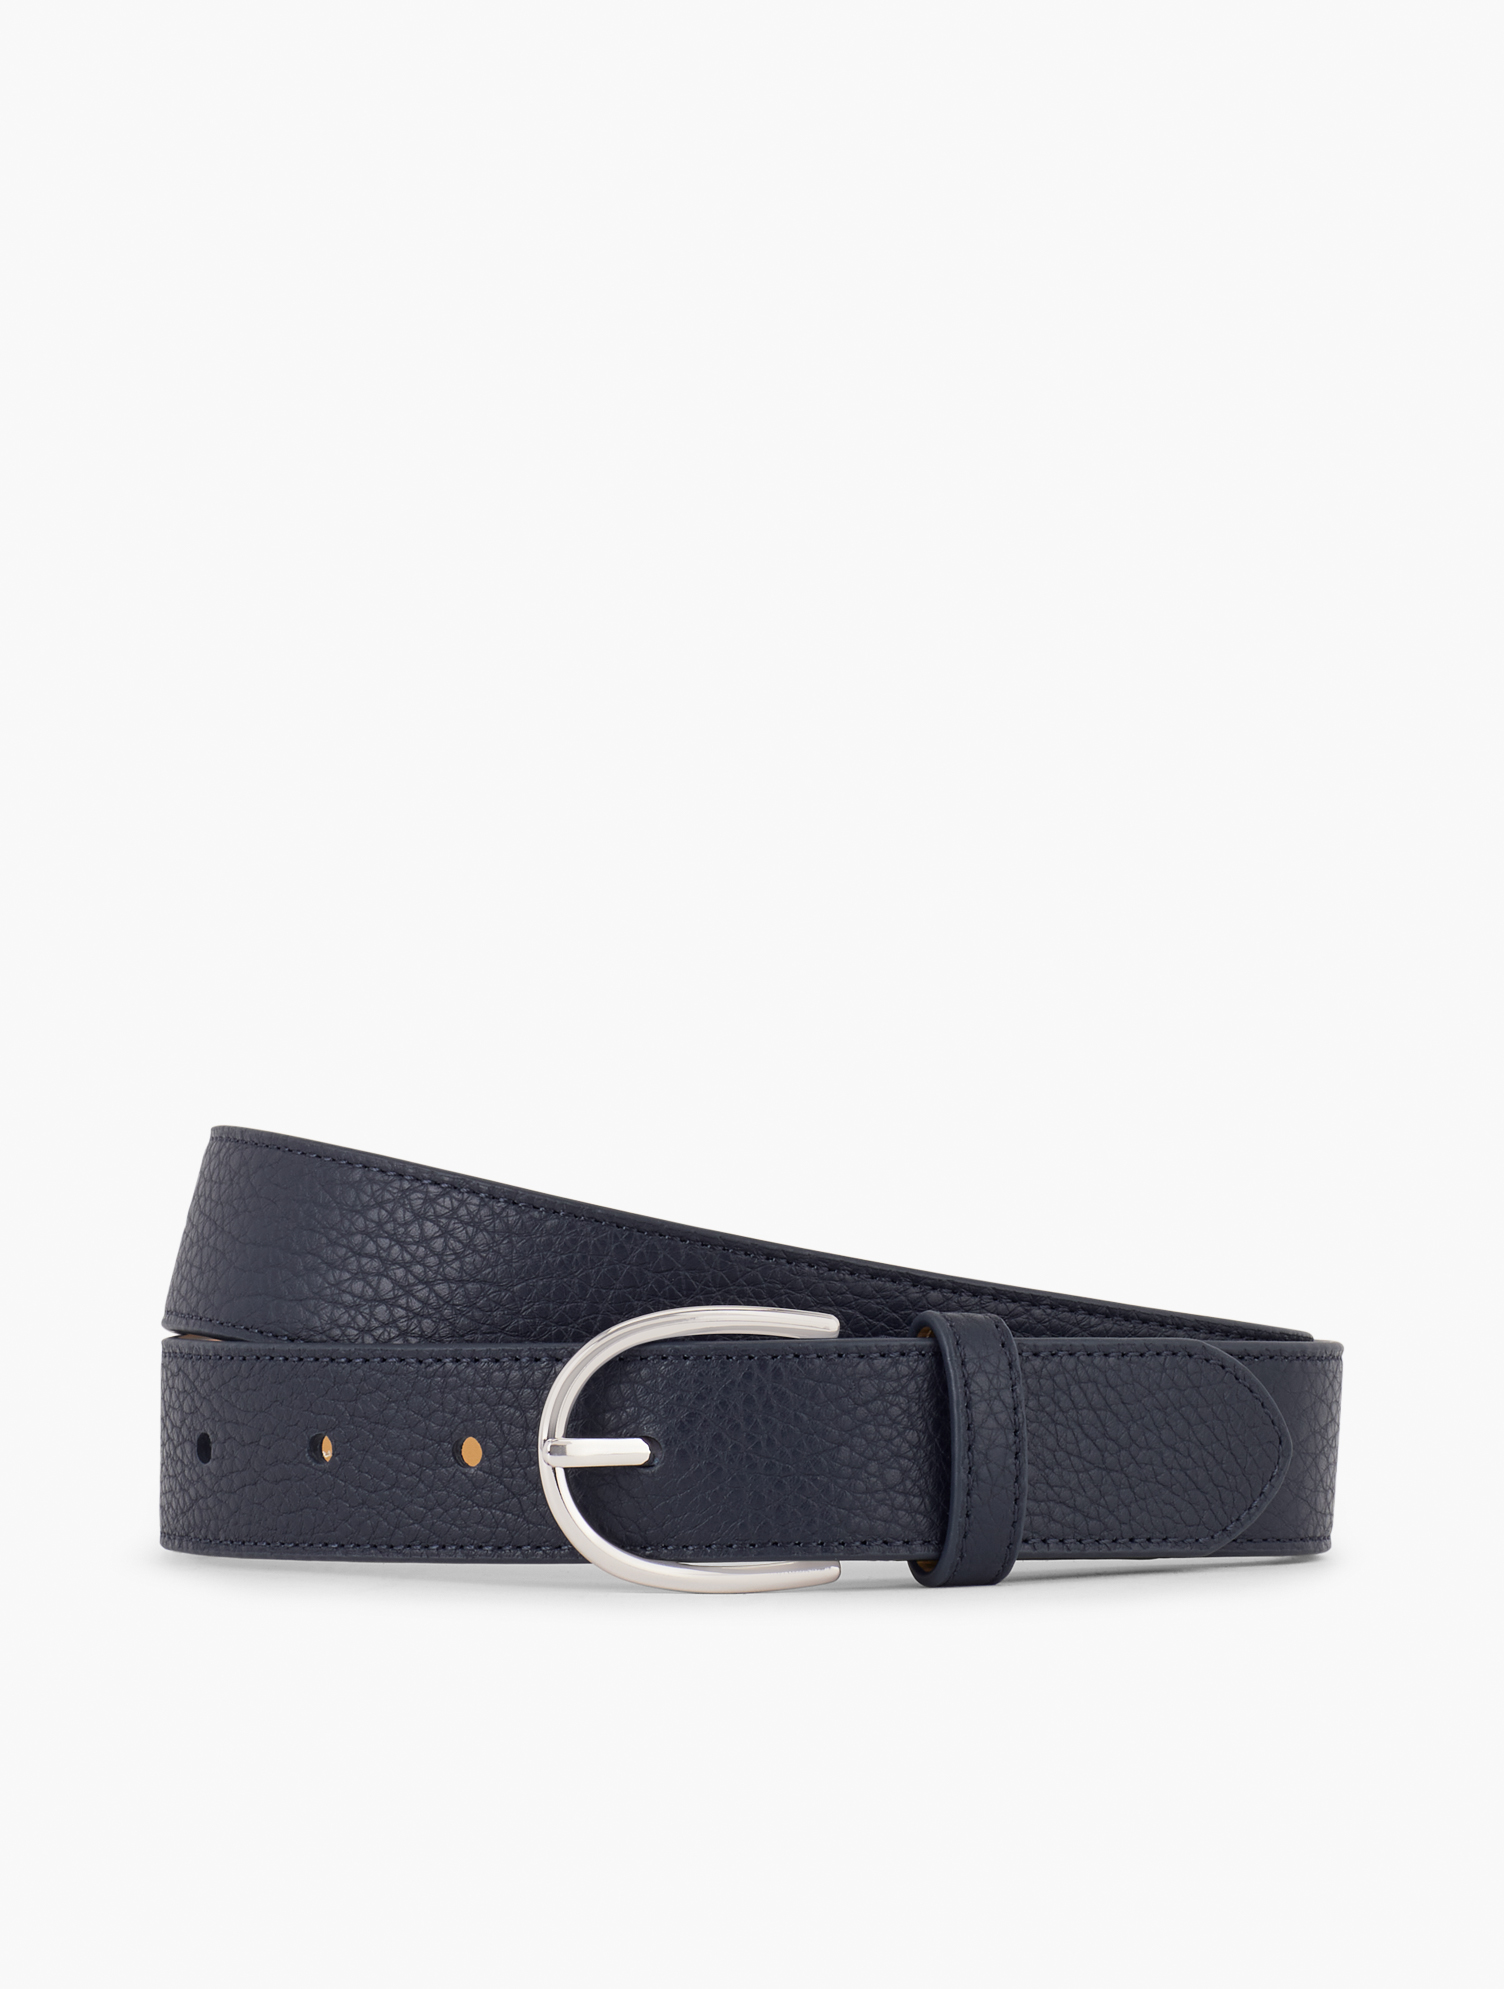 Talbots Leather Belt - Blue - Medium